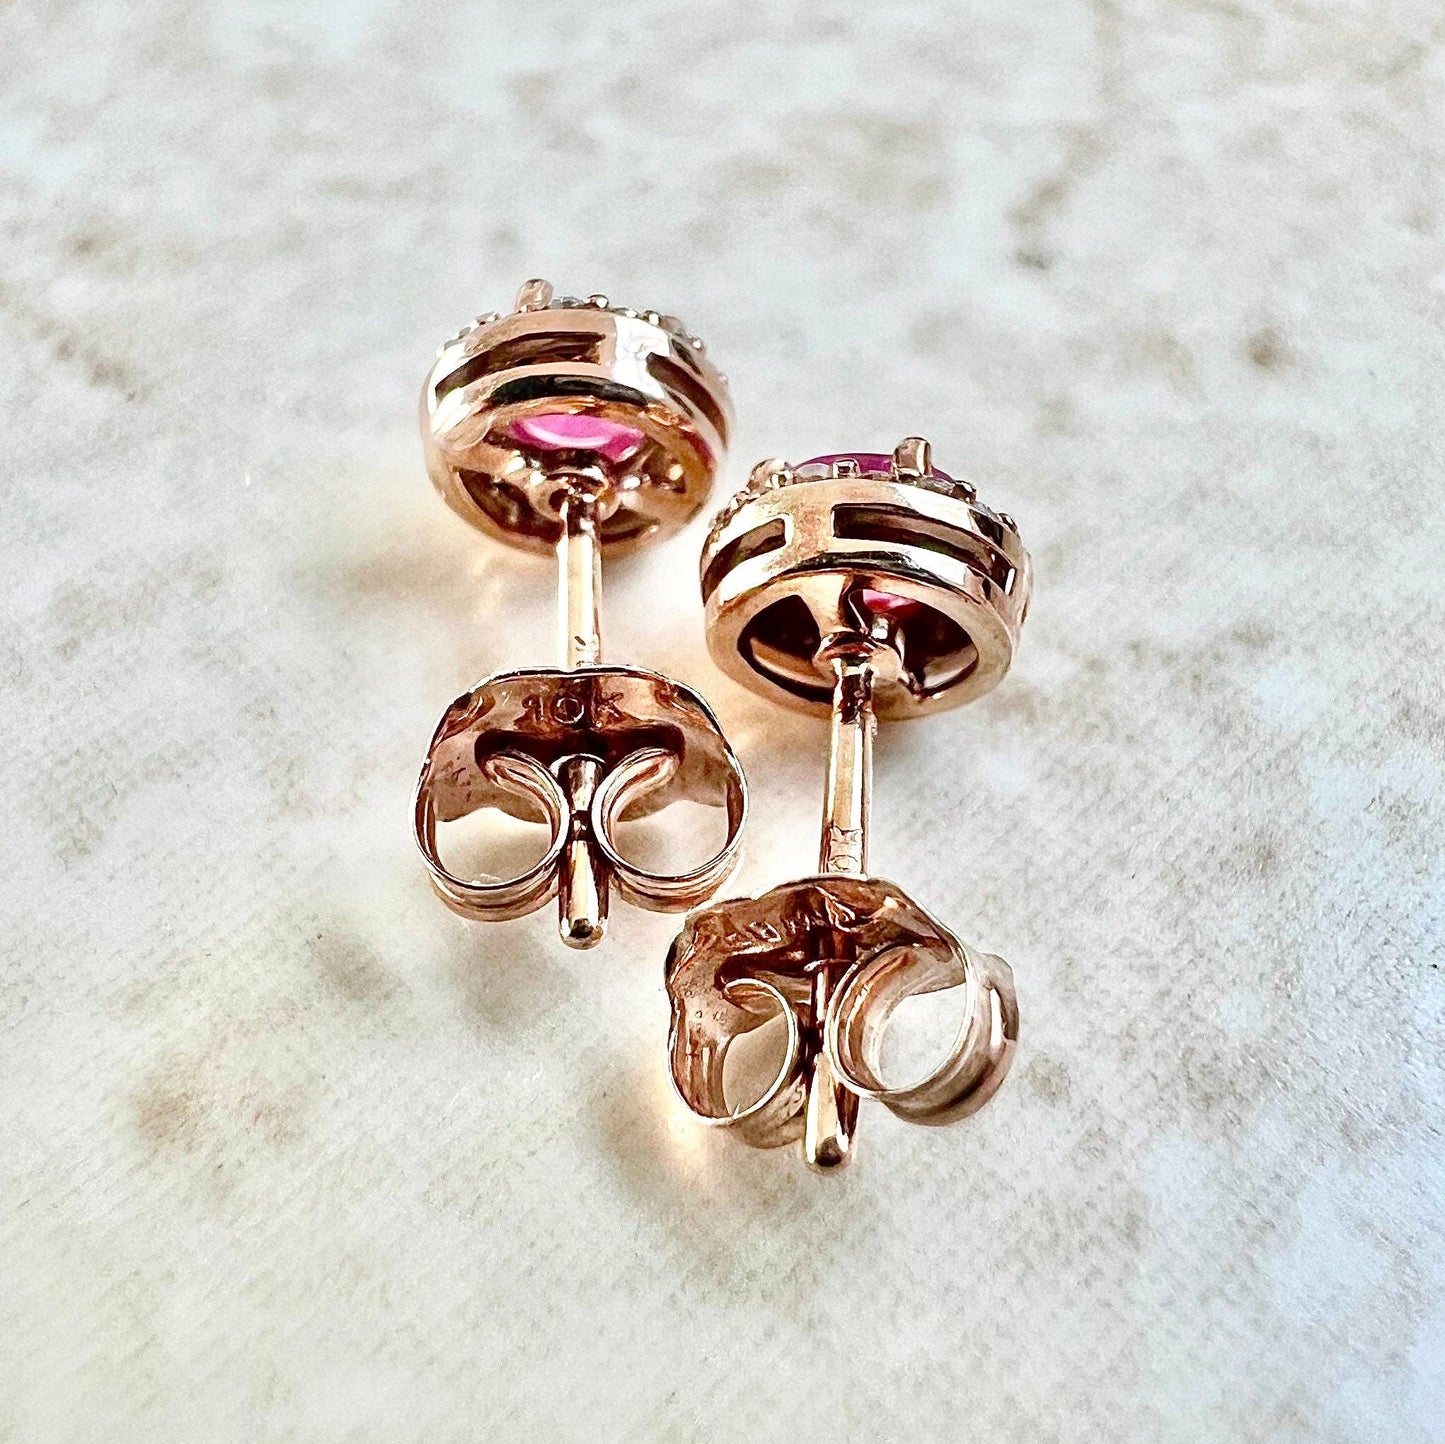 10 Karat Rose Gold Round Ruby & Diamond Halo Stud Earrings - WeilJewelry